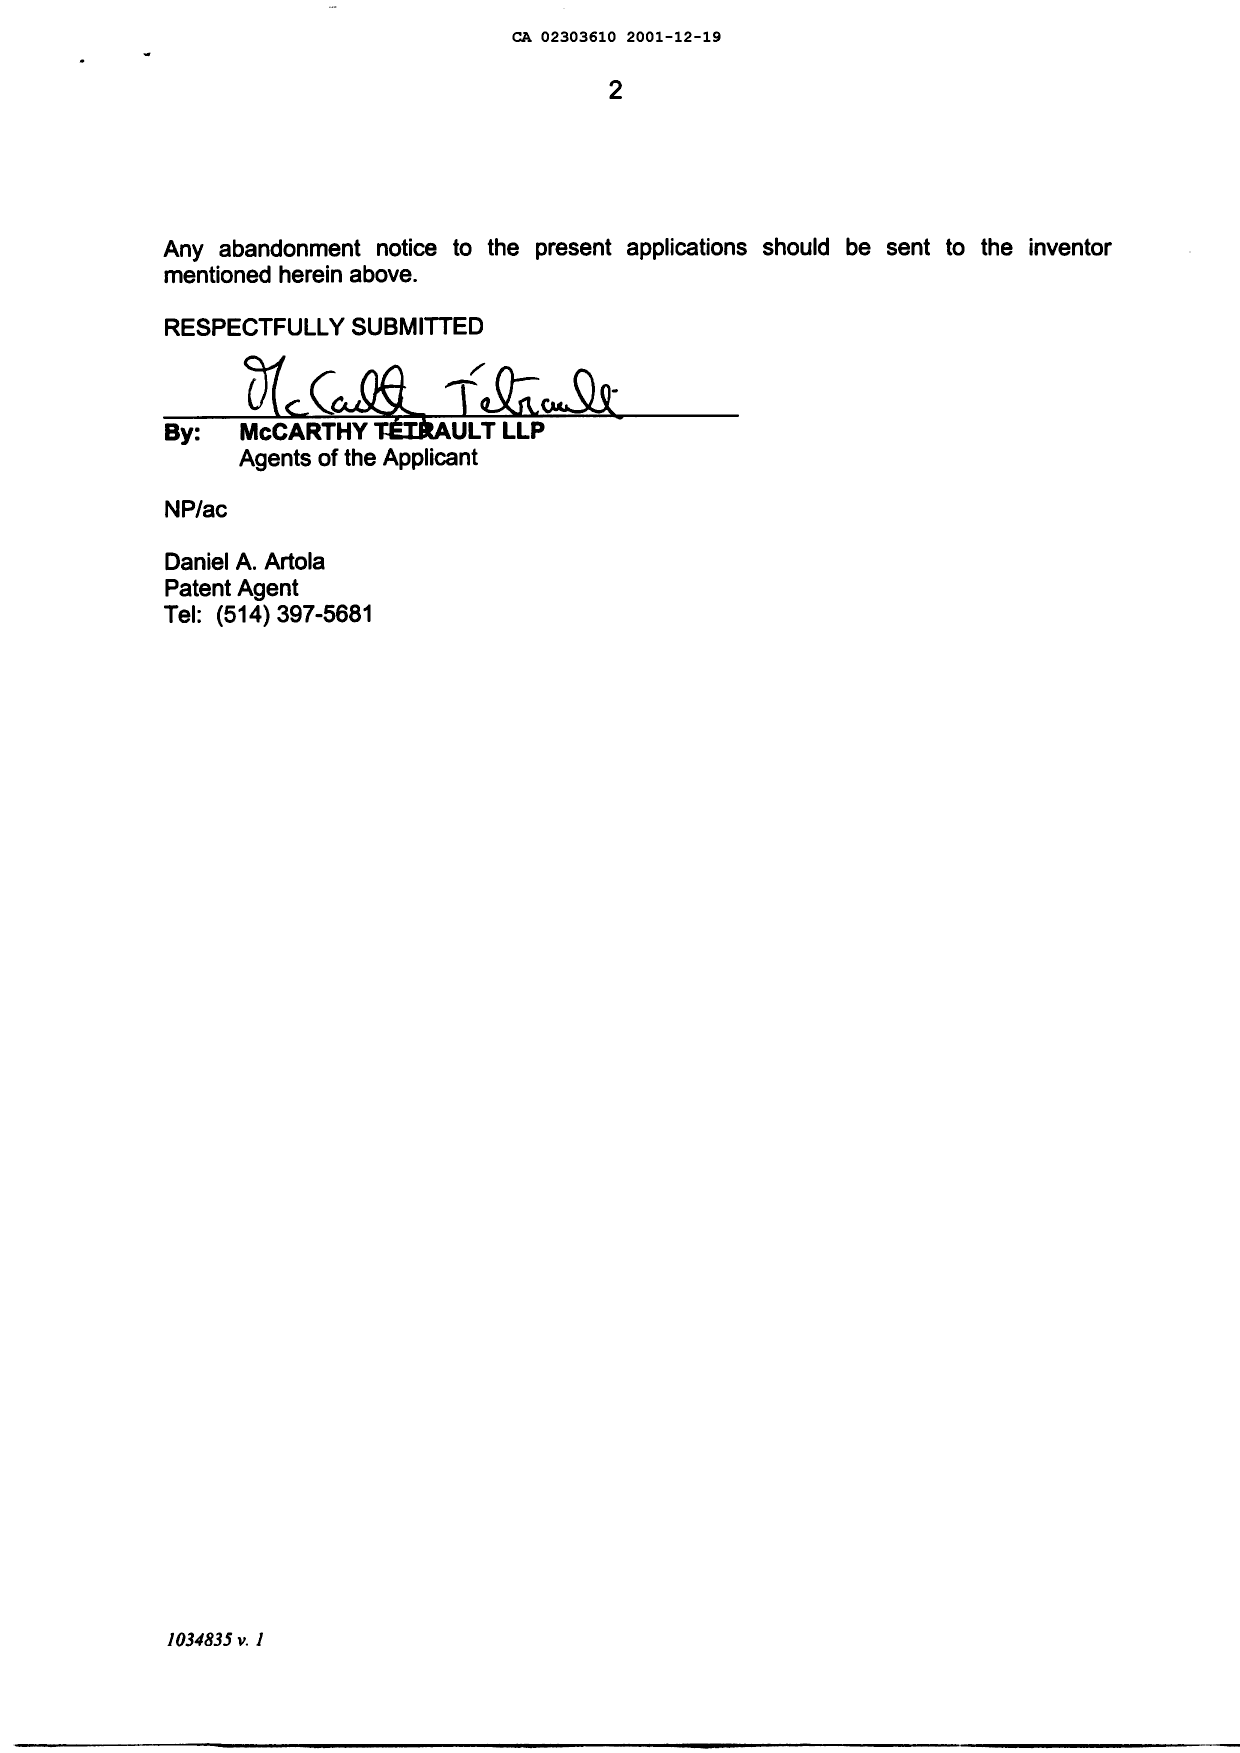 Canadian Patent Document 2303610. Correspondence 20011219. Image 2 of 2